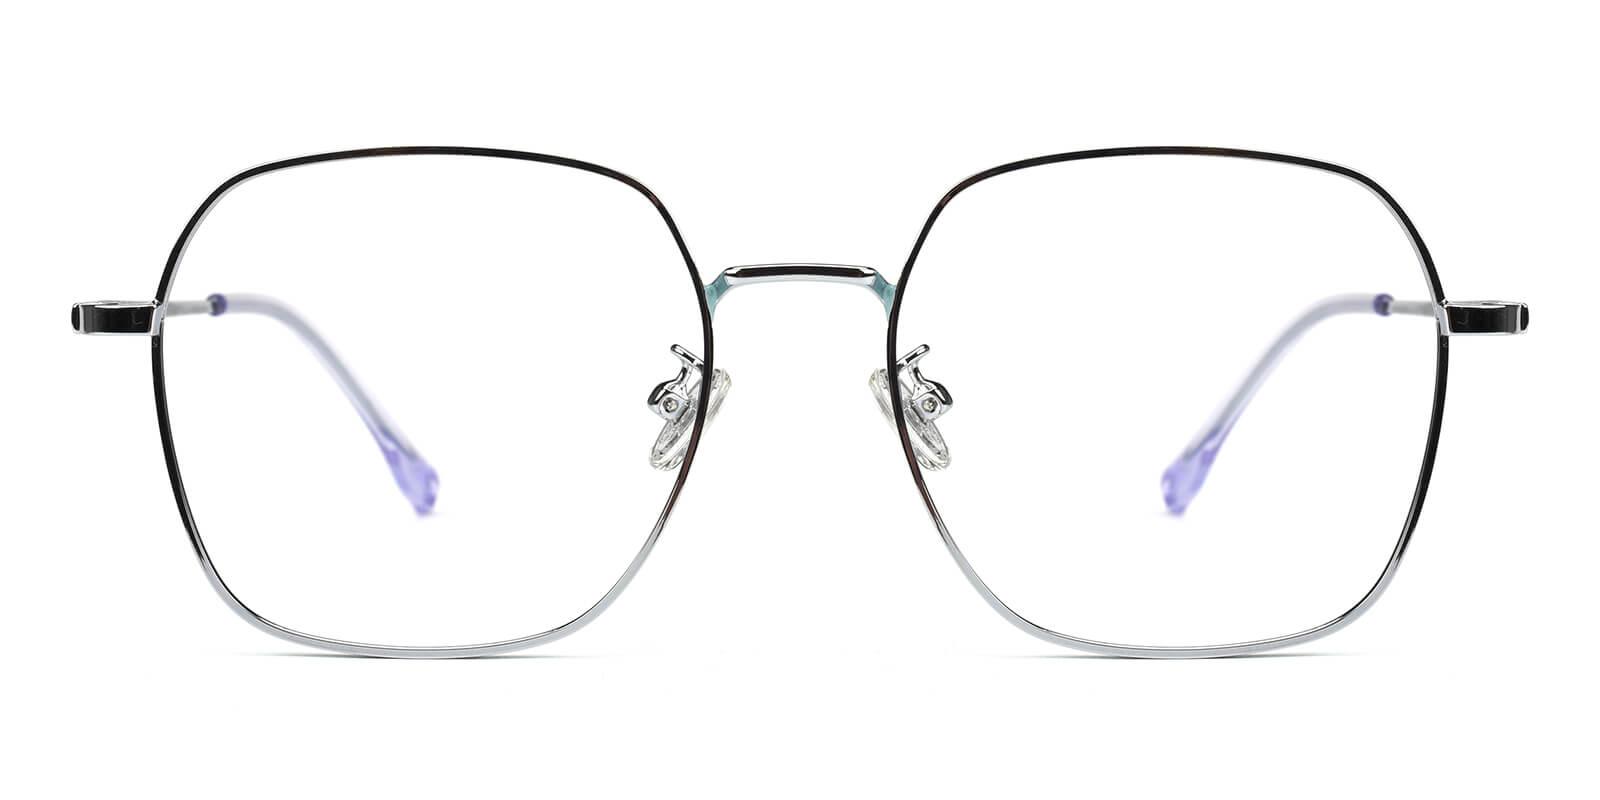 Vincoy-Silver-Square-Metal-Eyeglasses-detail